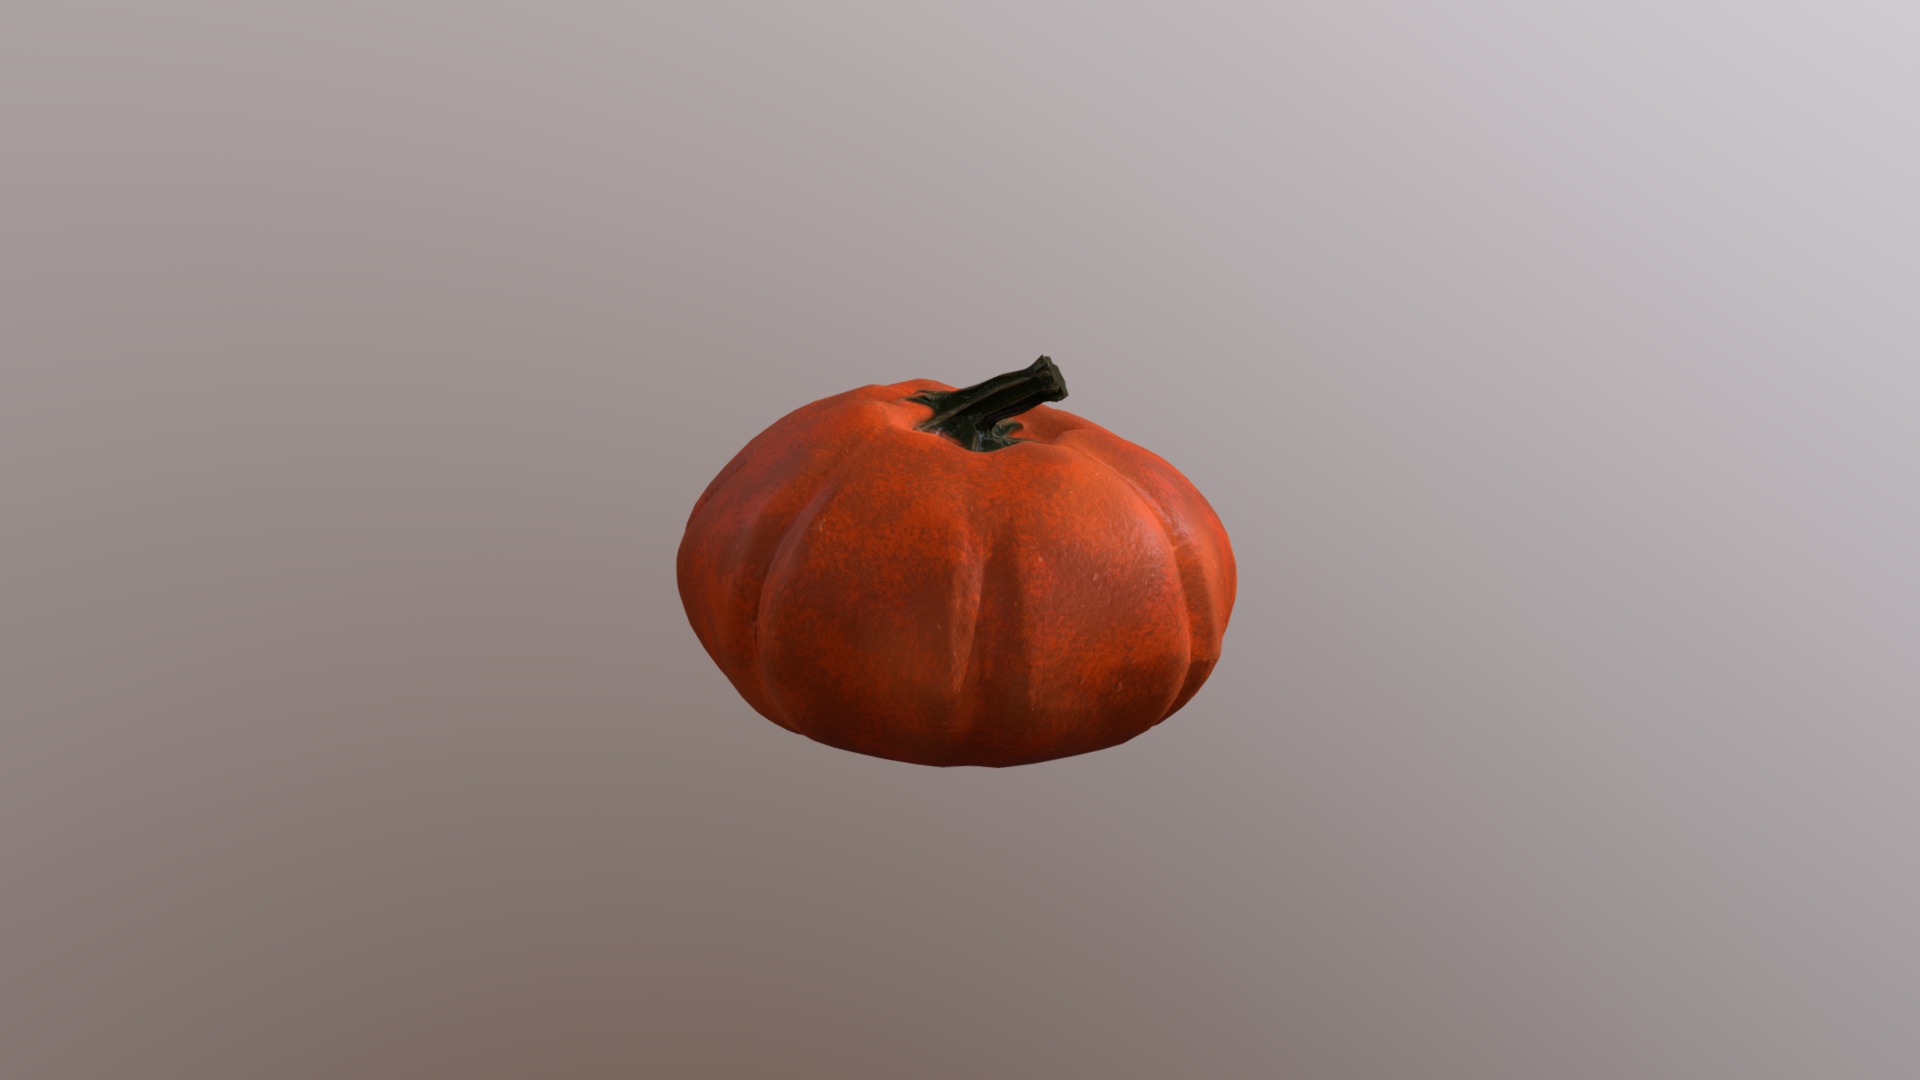 3D model Baked Pumpkin – Fall 2018 – loop 001 - This is a 3D model of the Baked Pumpkin - Fall 2018 - loop 001. The 3D model is about a close up of a pumpkin.